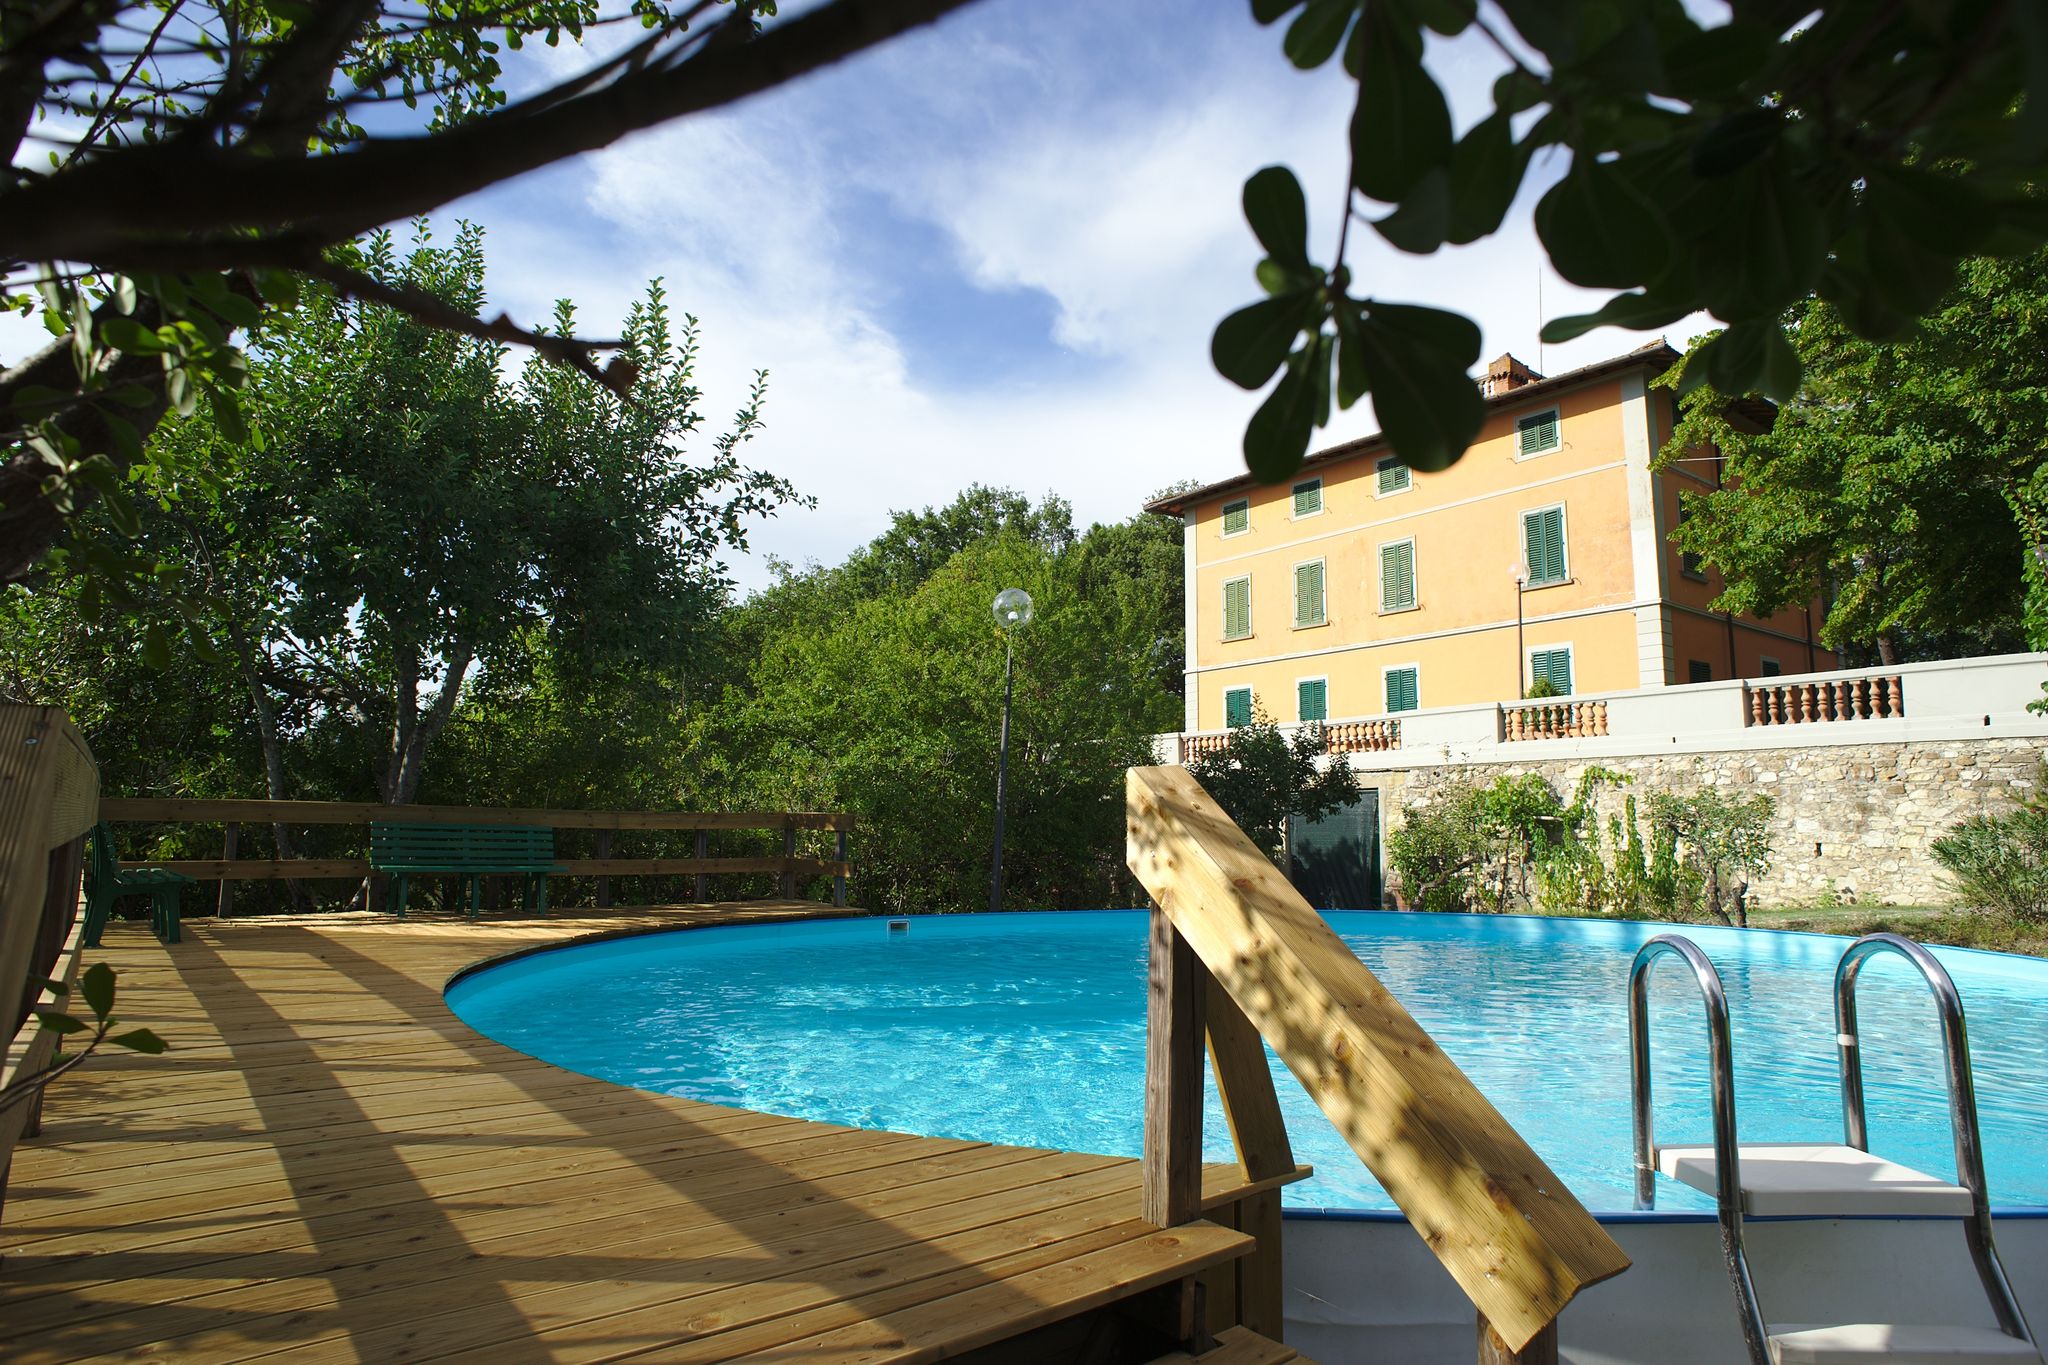 Modernes Ferienhaus mit Pool in Montefiridolfi, Italien